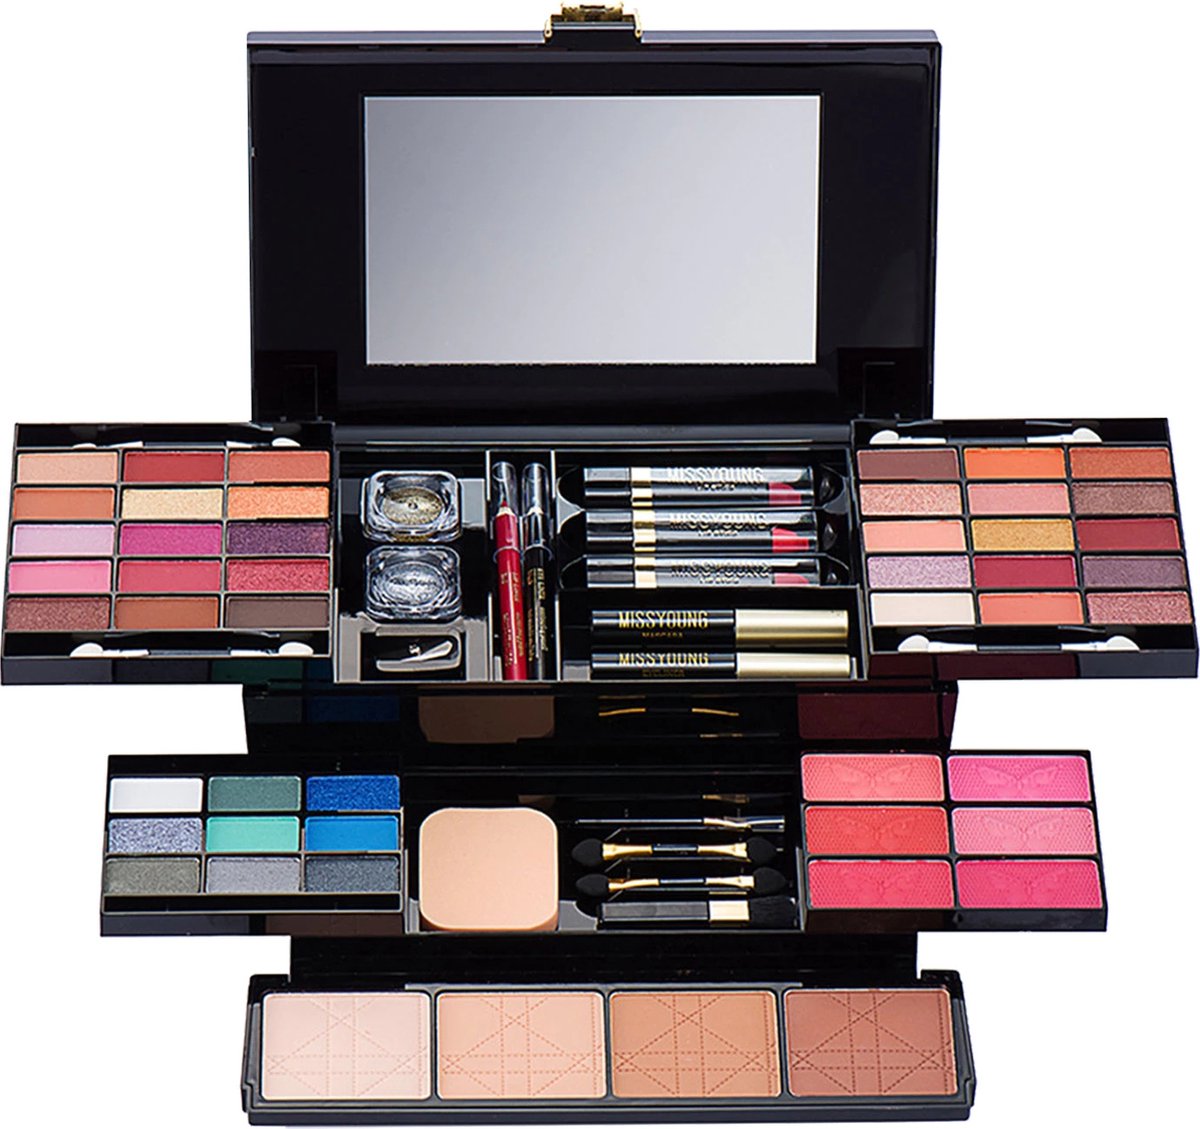 Polaza® Make-up Palet - Make-up - Meerdere kleuren - Oogschaduw - Highlighter - Borsteltjes